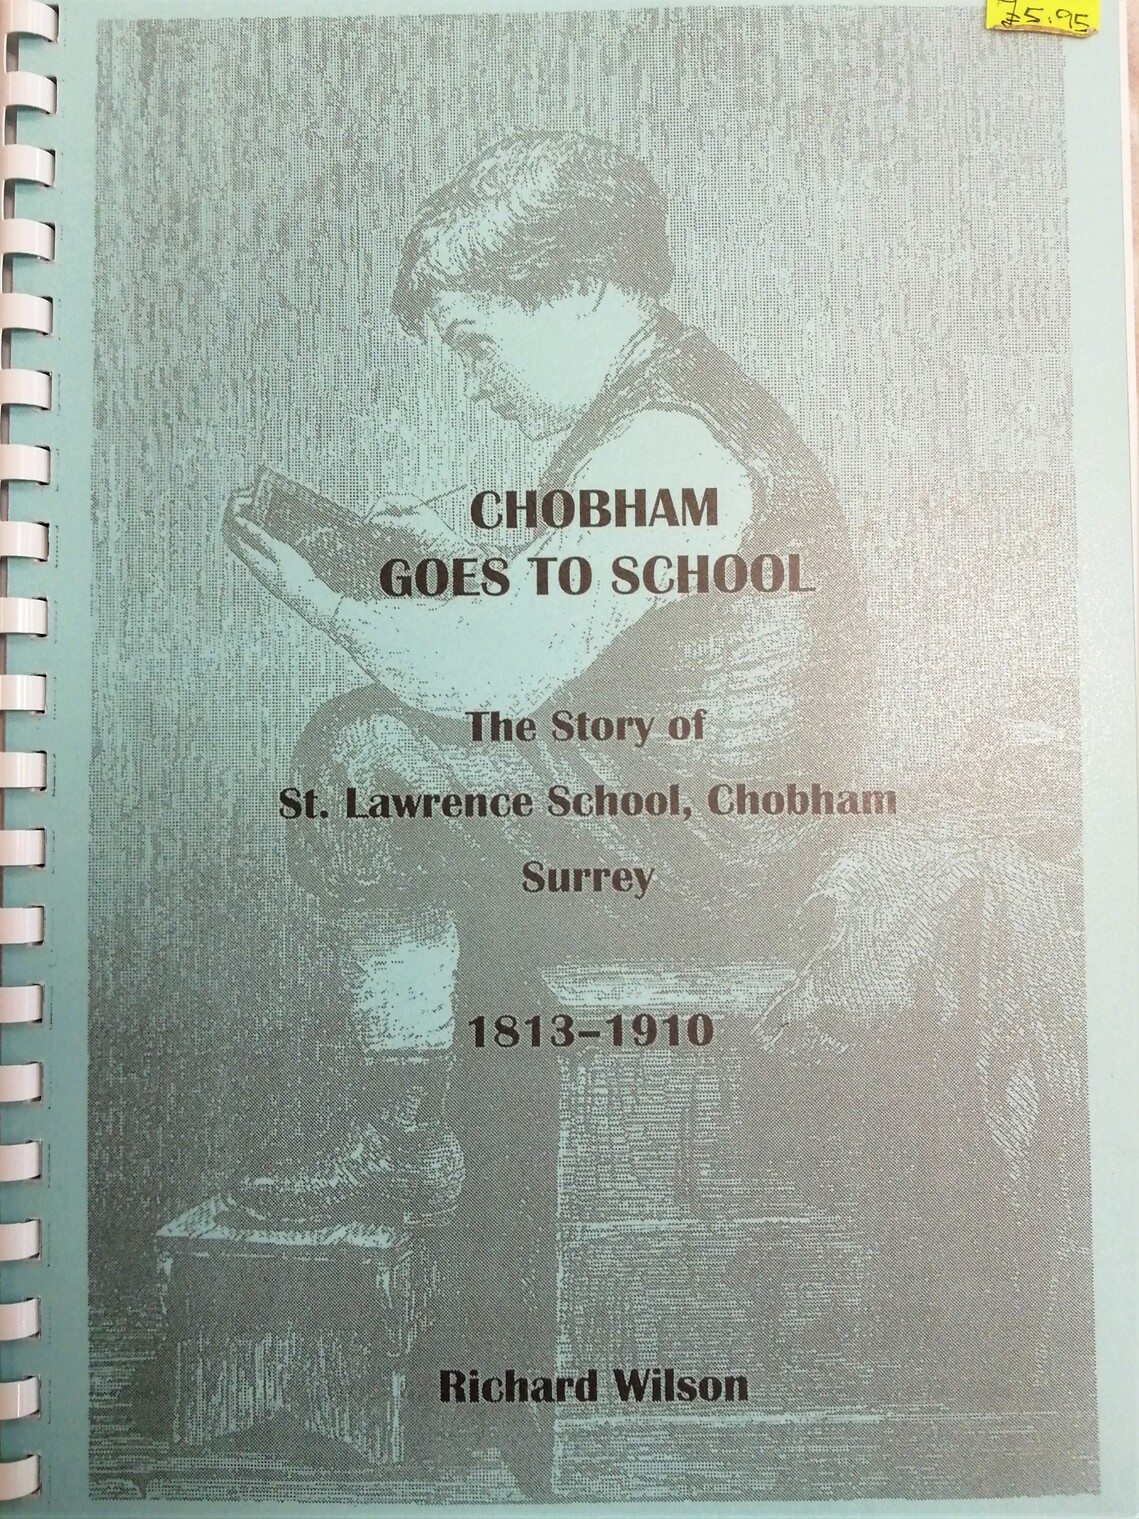 CHOBHAM GOES TO SCHOOL